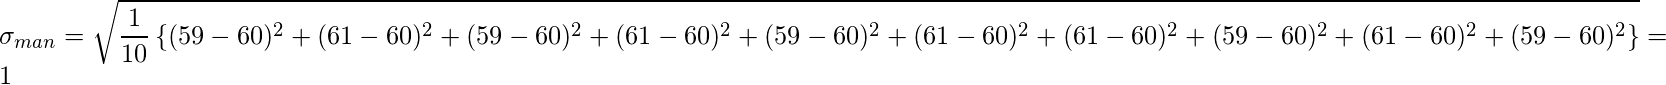  \displaystyle \sigma_{man} = \sqrt{\frac{1}{10} \left\{ (59-60)^2 + (61-60)^2 + (59-60)^2 + (61-60)^2 + (59-60)^2 + (61-60)^2 + (61-60)^2 + (59-60)^2 + (61-60)^2 + (59-60)^2 \right\} } = 1 